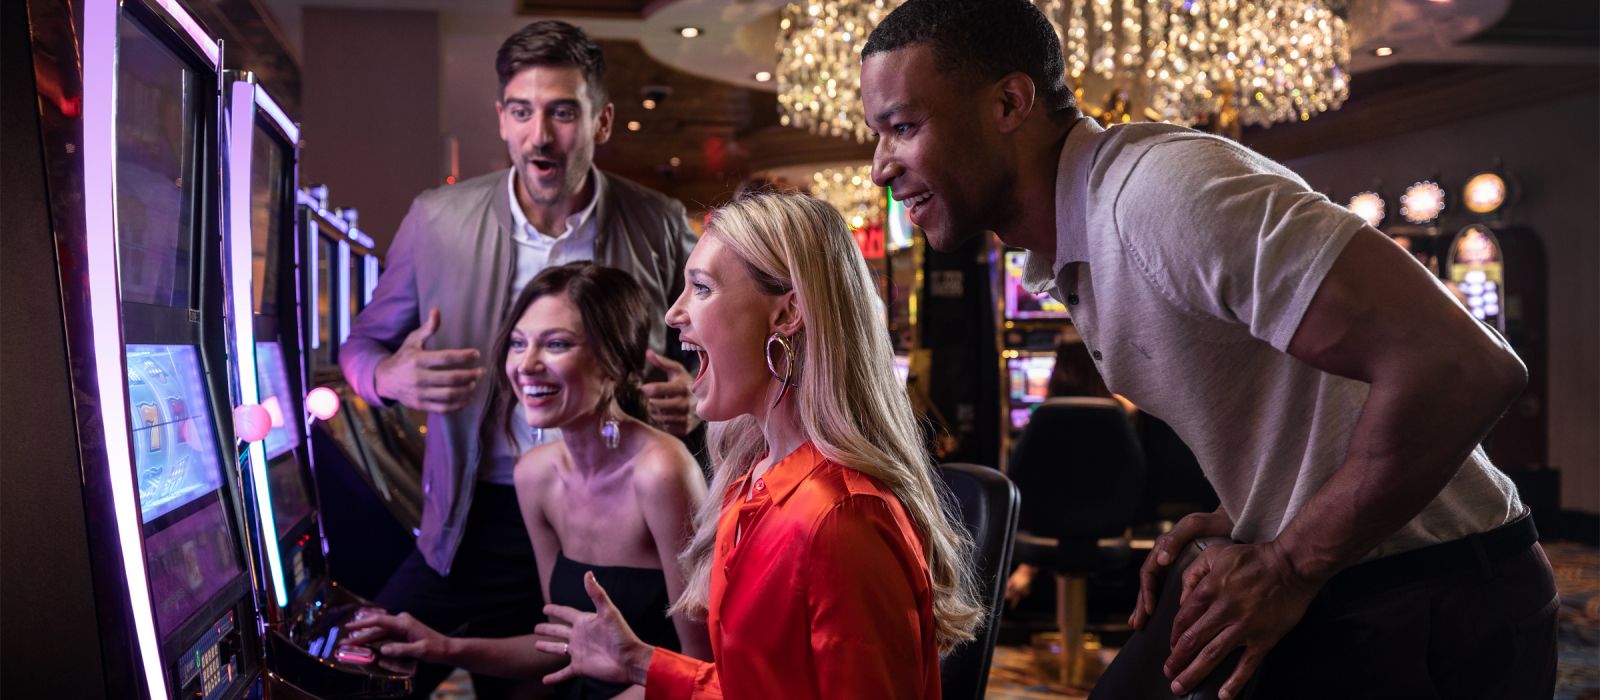 hotel resort casino players winning jackpot